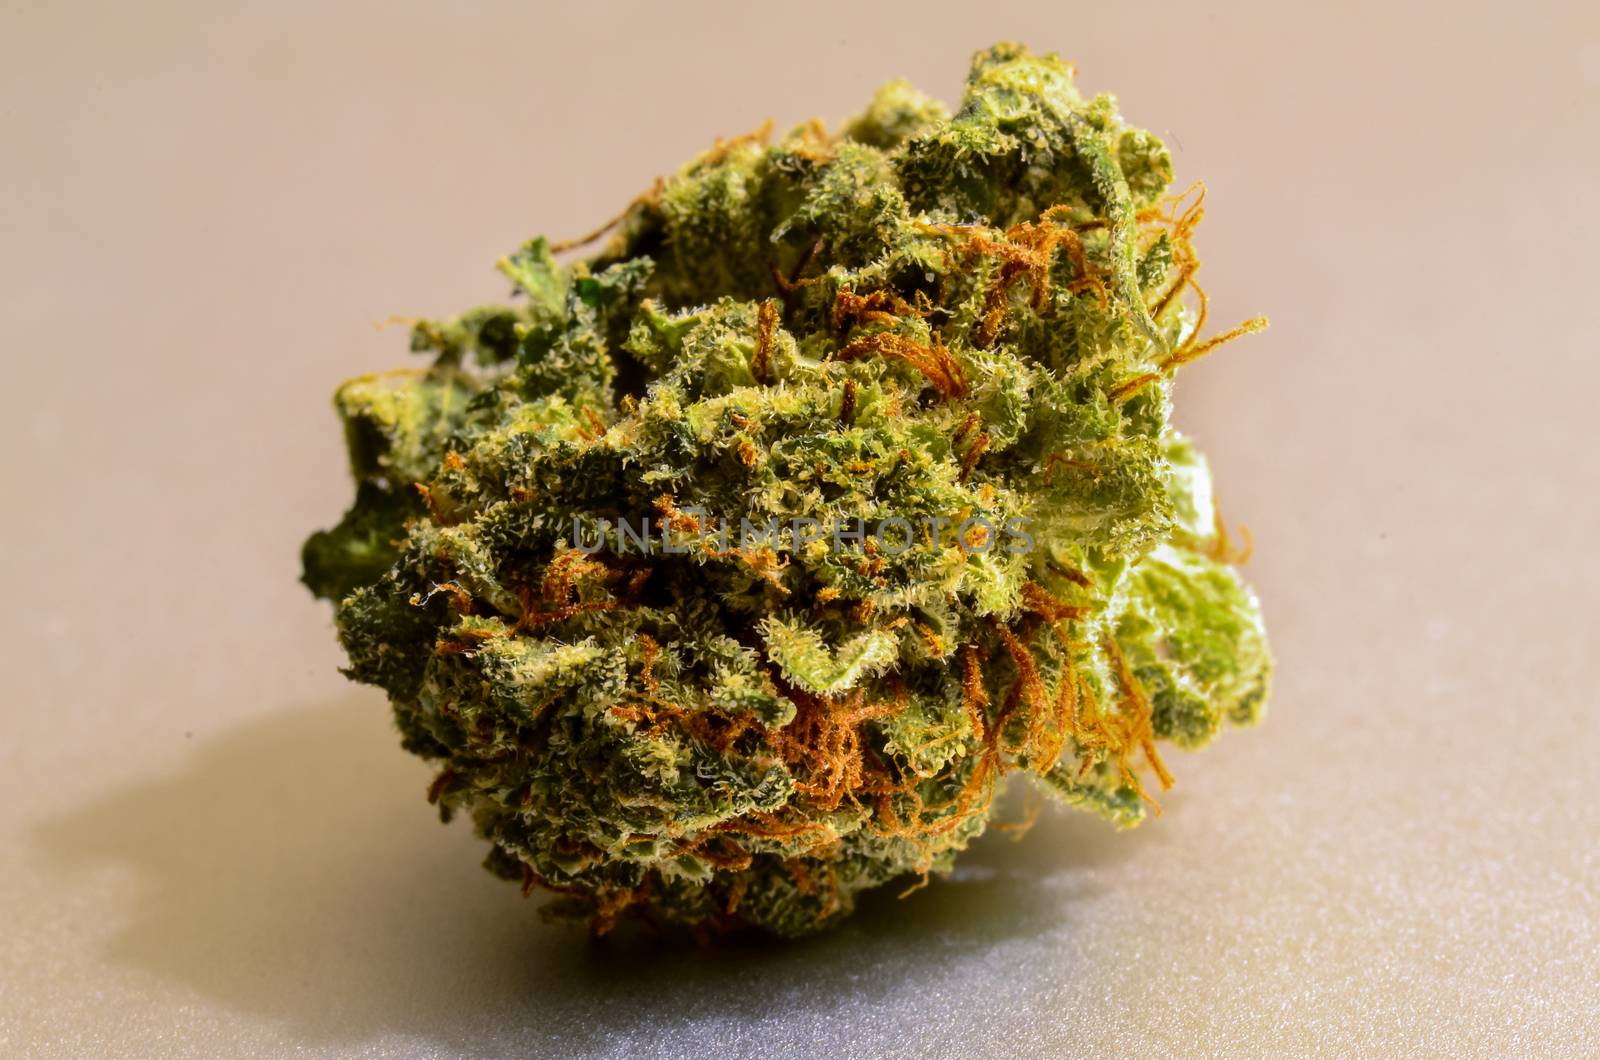 Small Nug of Casey Jones recreational marijuana grown by Kindman